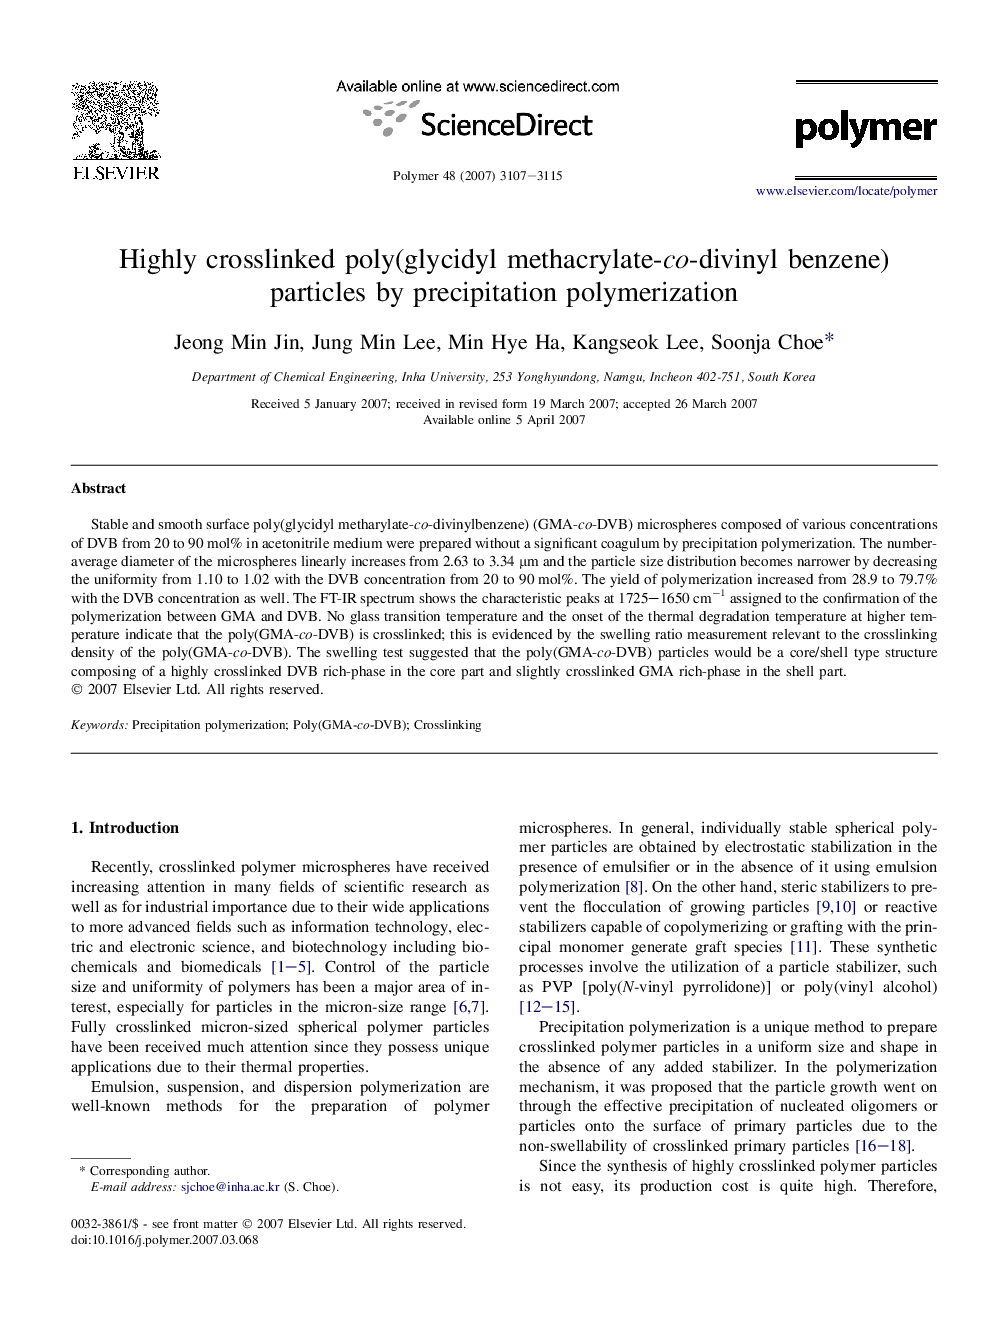 Highly crosslinked poly(glycidyl methacrylate-co-divinyl benzene) particles by precipitation polymerization